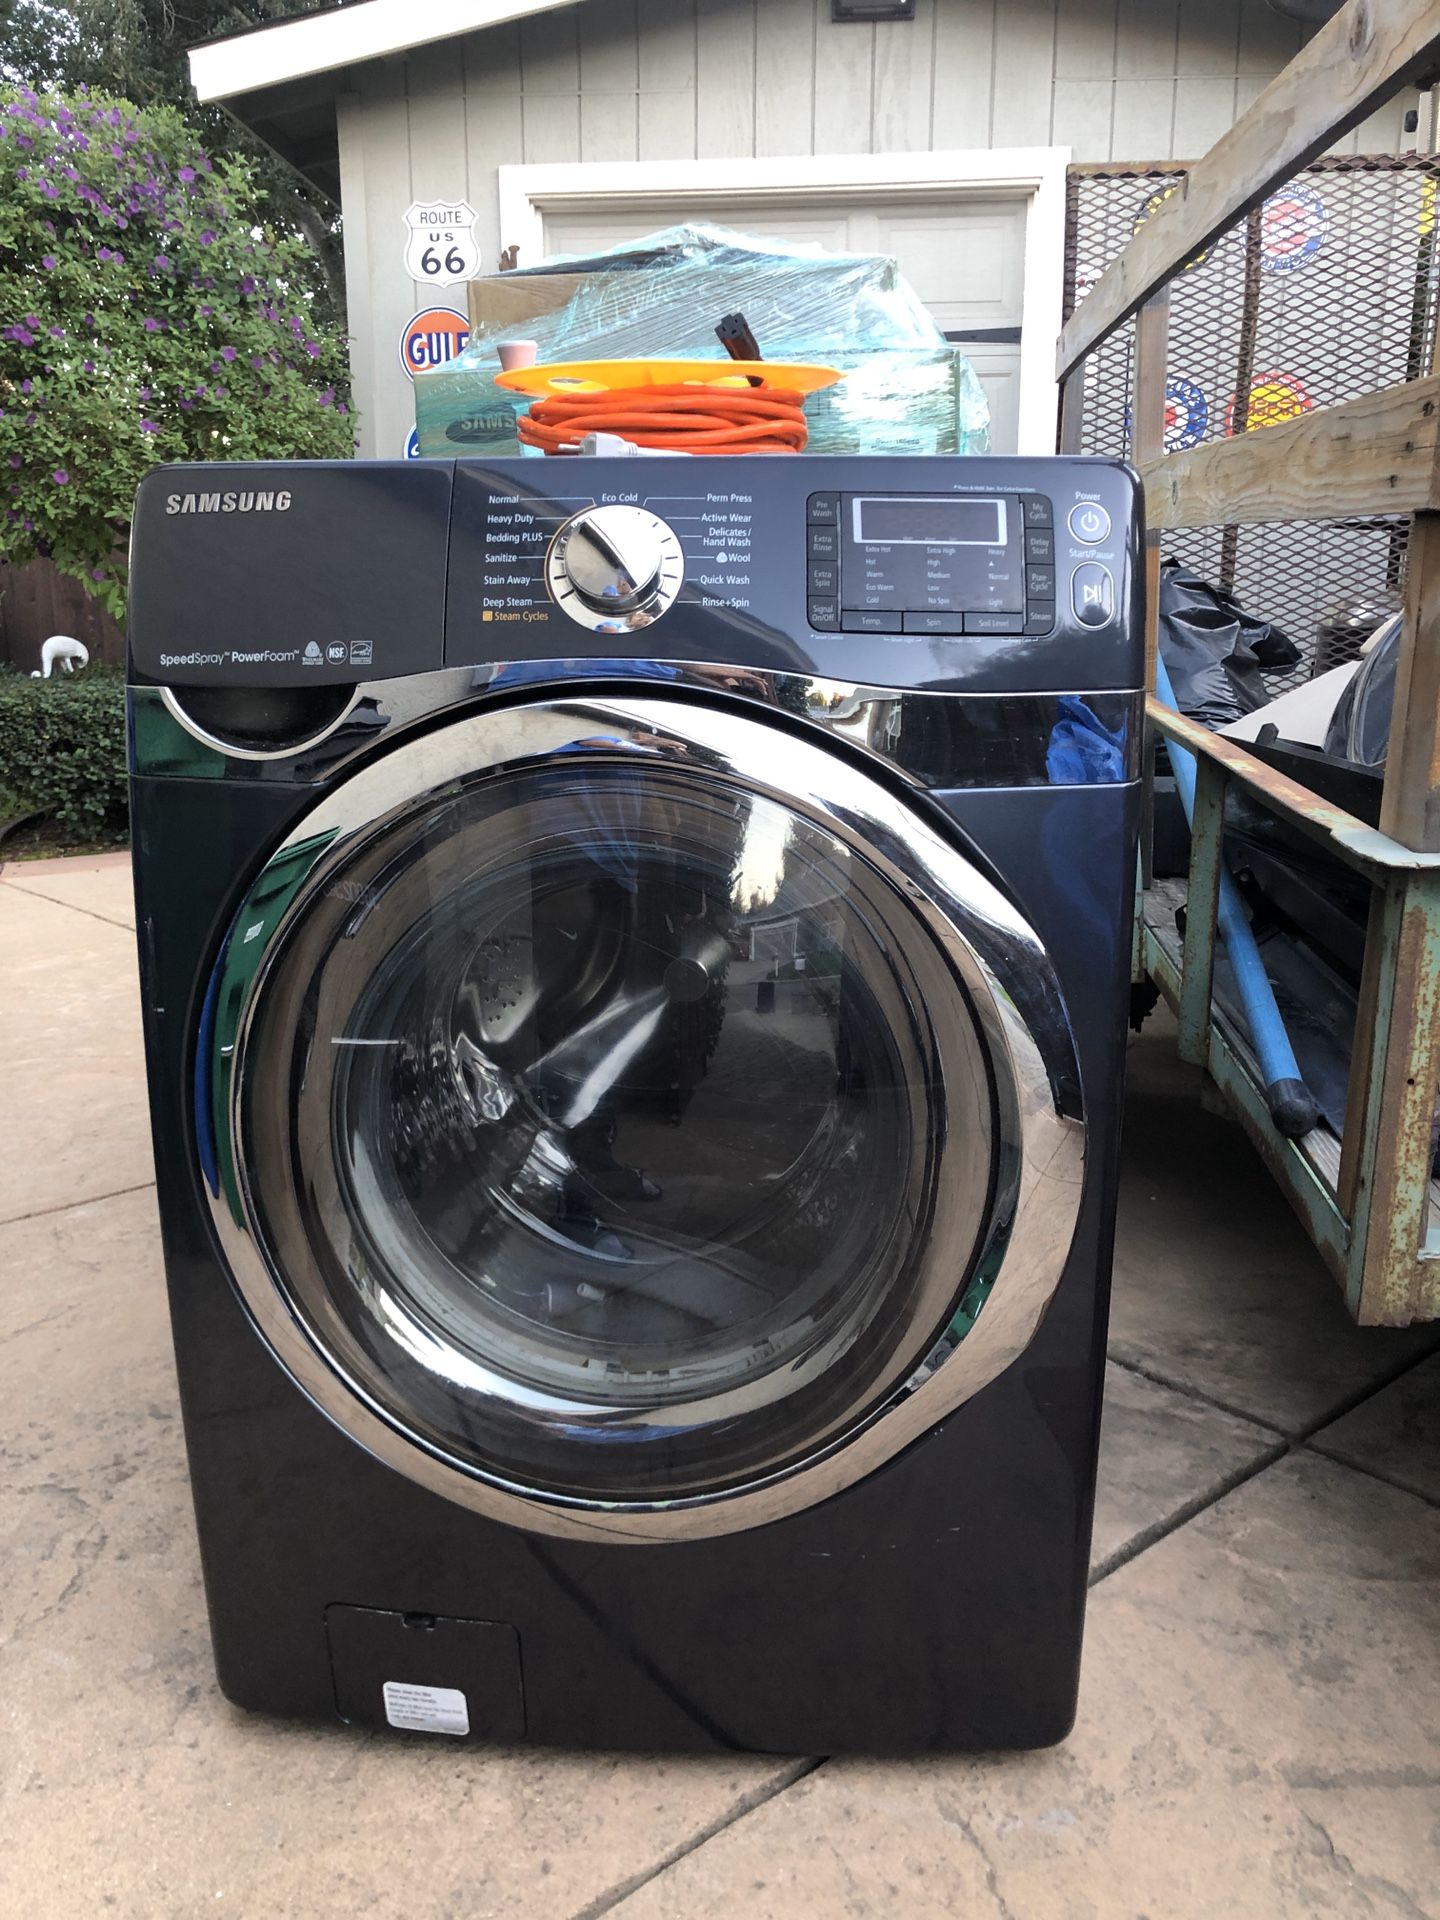 Free Samsung washing machine and $700 worth of new parts